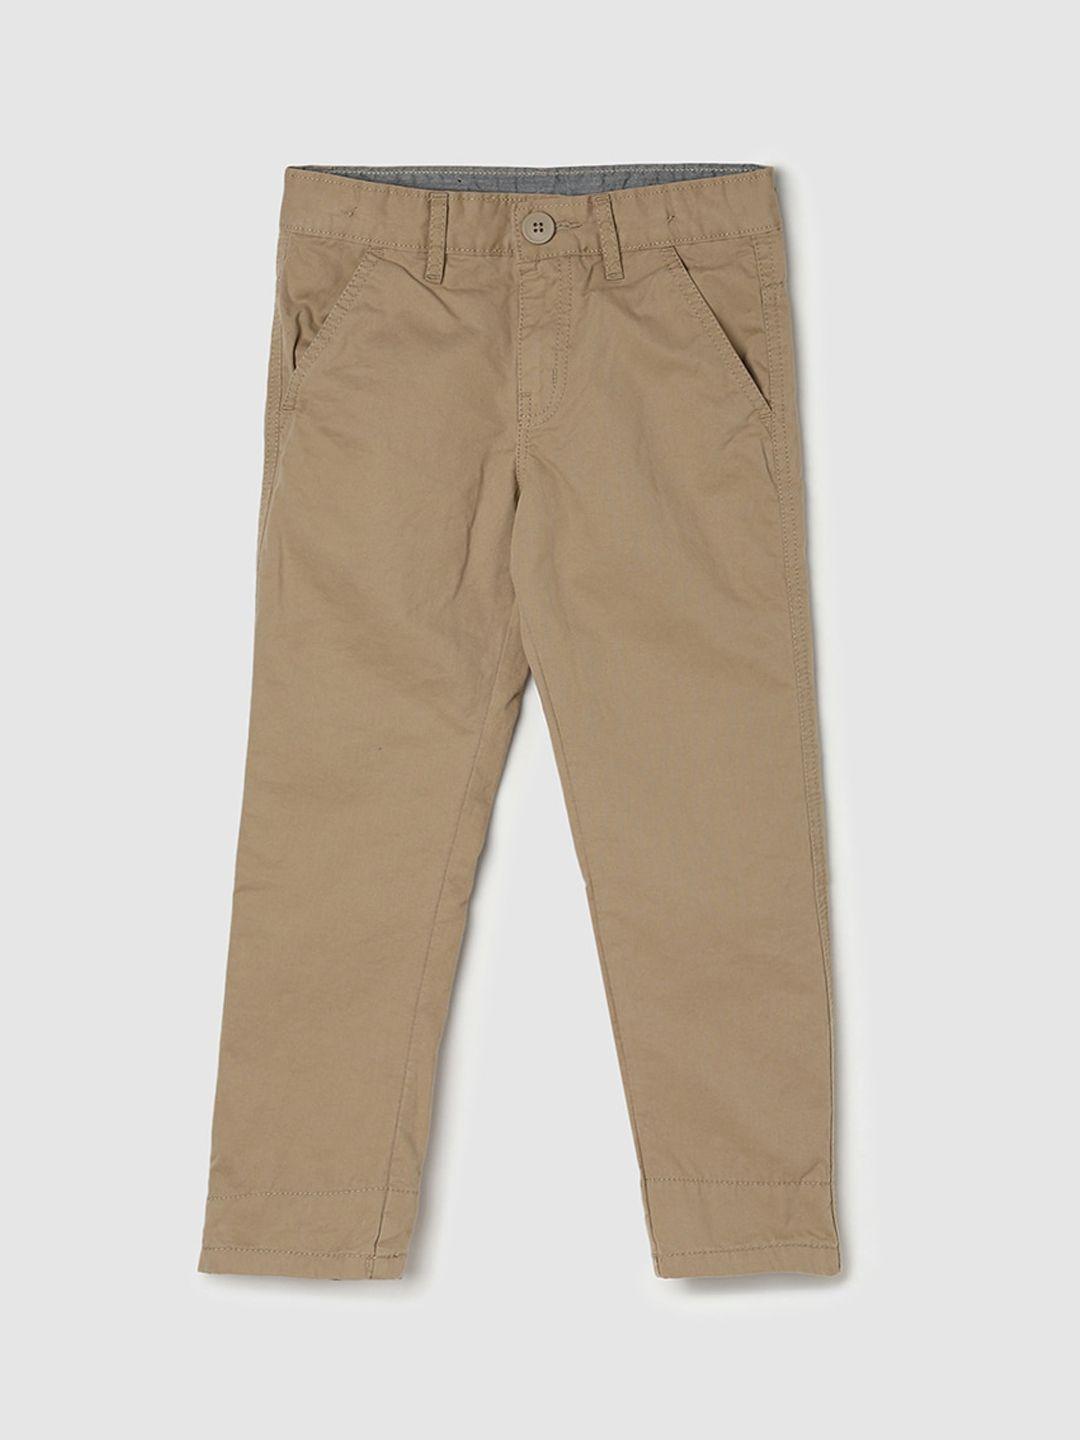 max boys plain regular pure cotton trousers